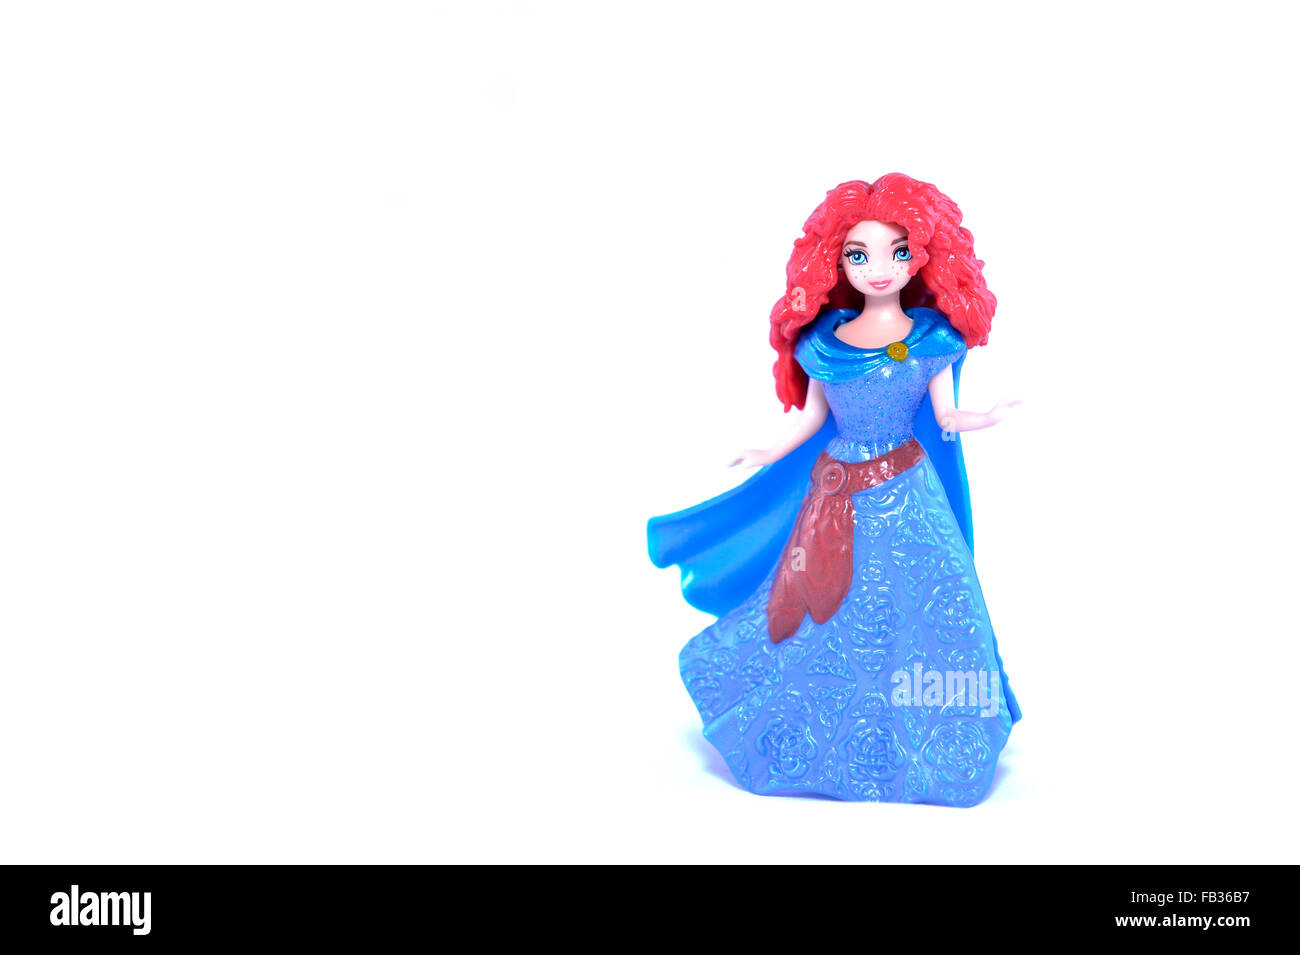 Disney Princess Magiclip Merida Toy Doll Stock Photo